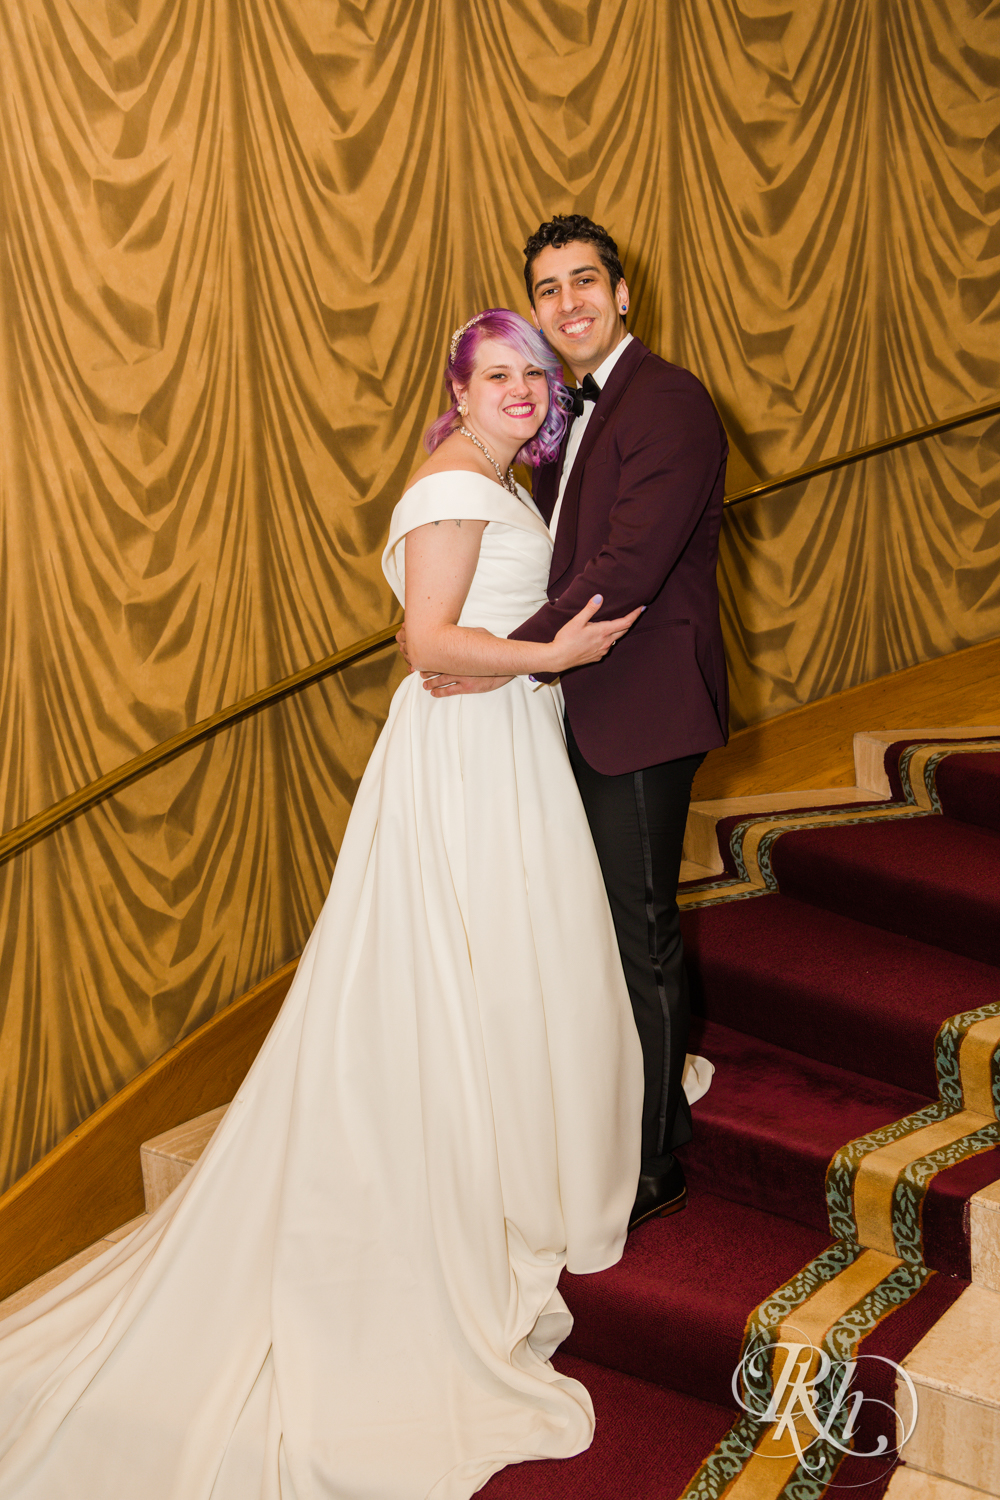 Bride with rainbow hair and groom in maroon suit smile at the Saint Paul Hotel in Saint Paul, Minnesota.